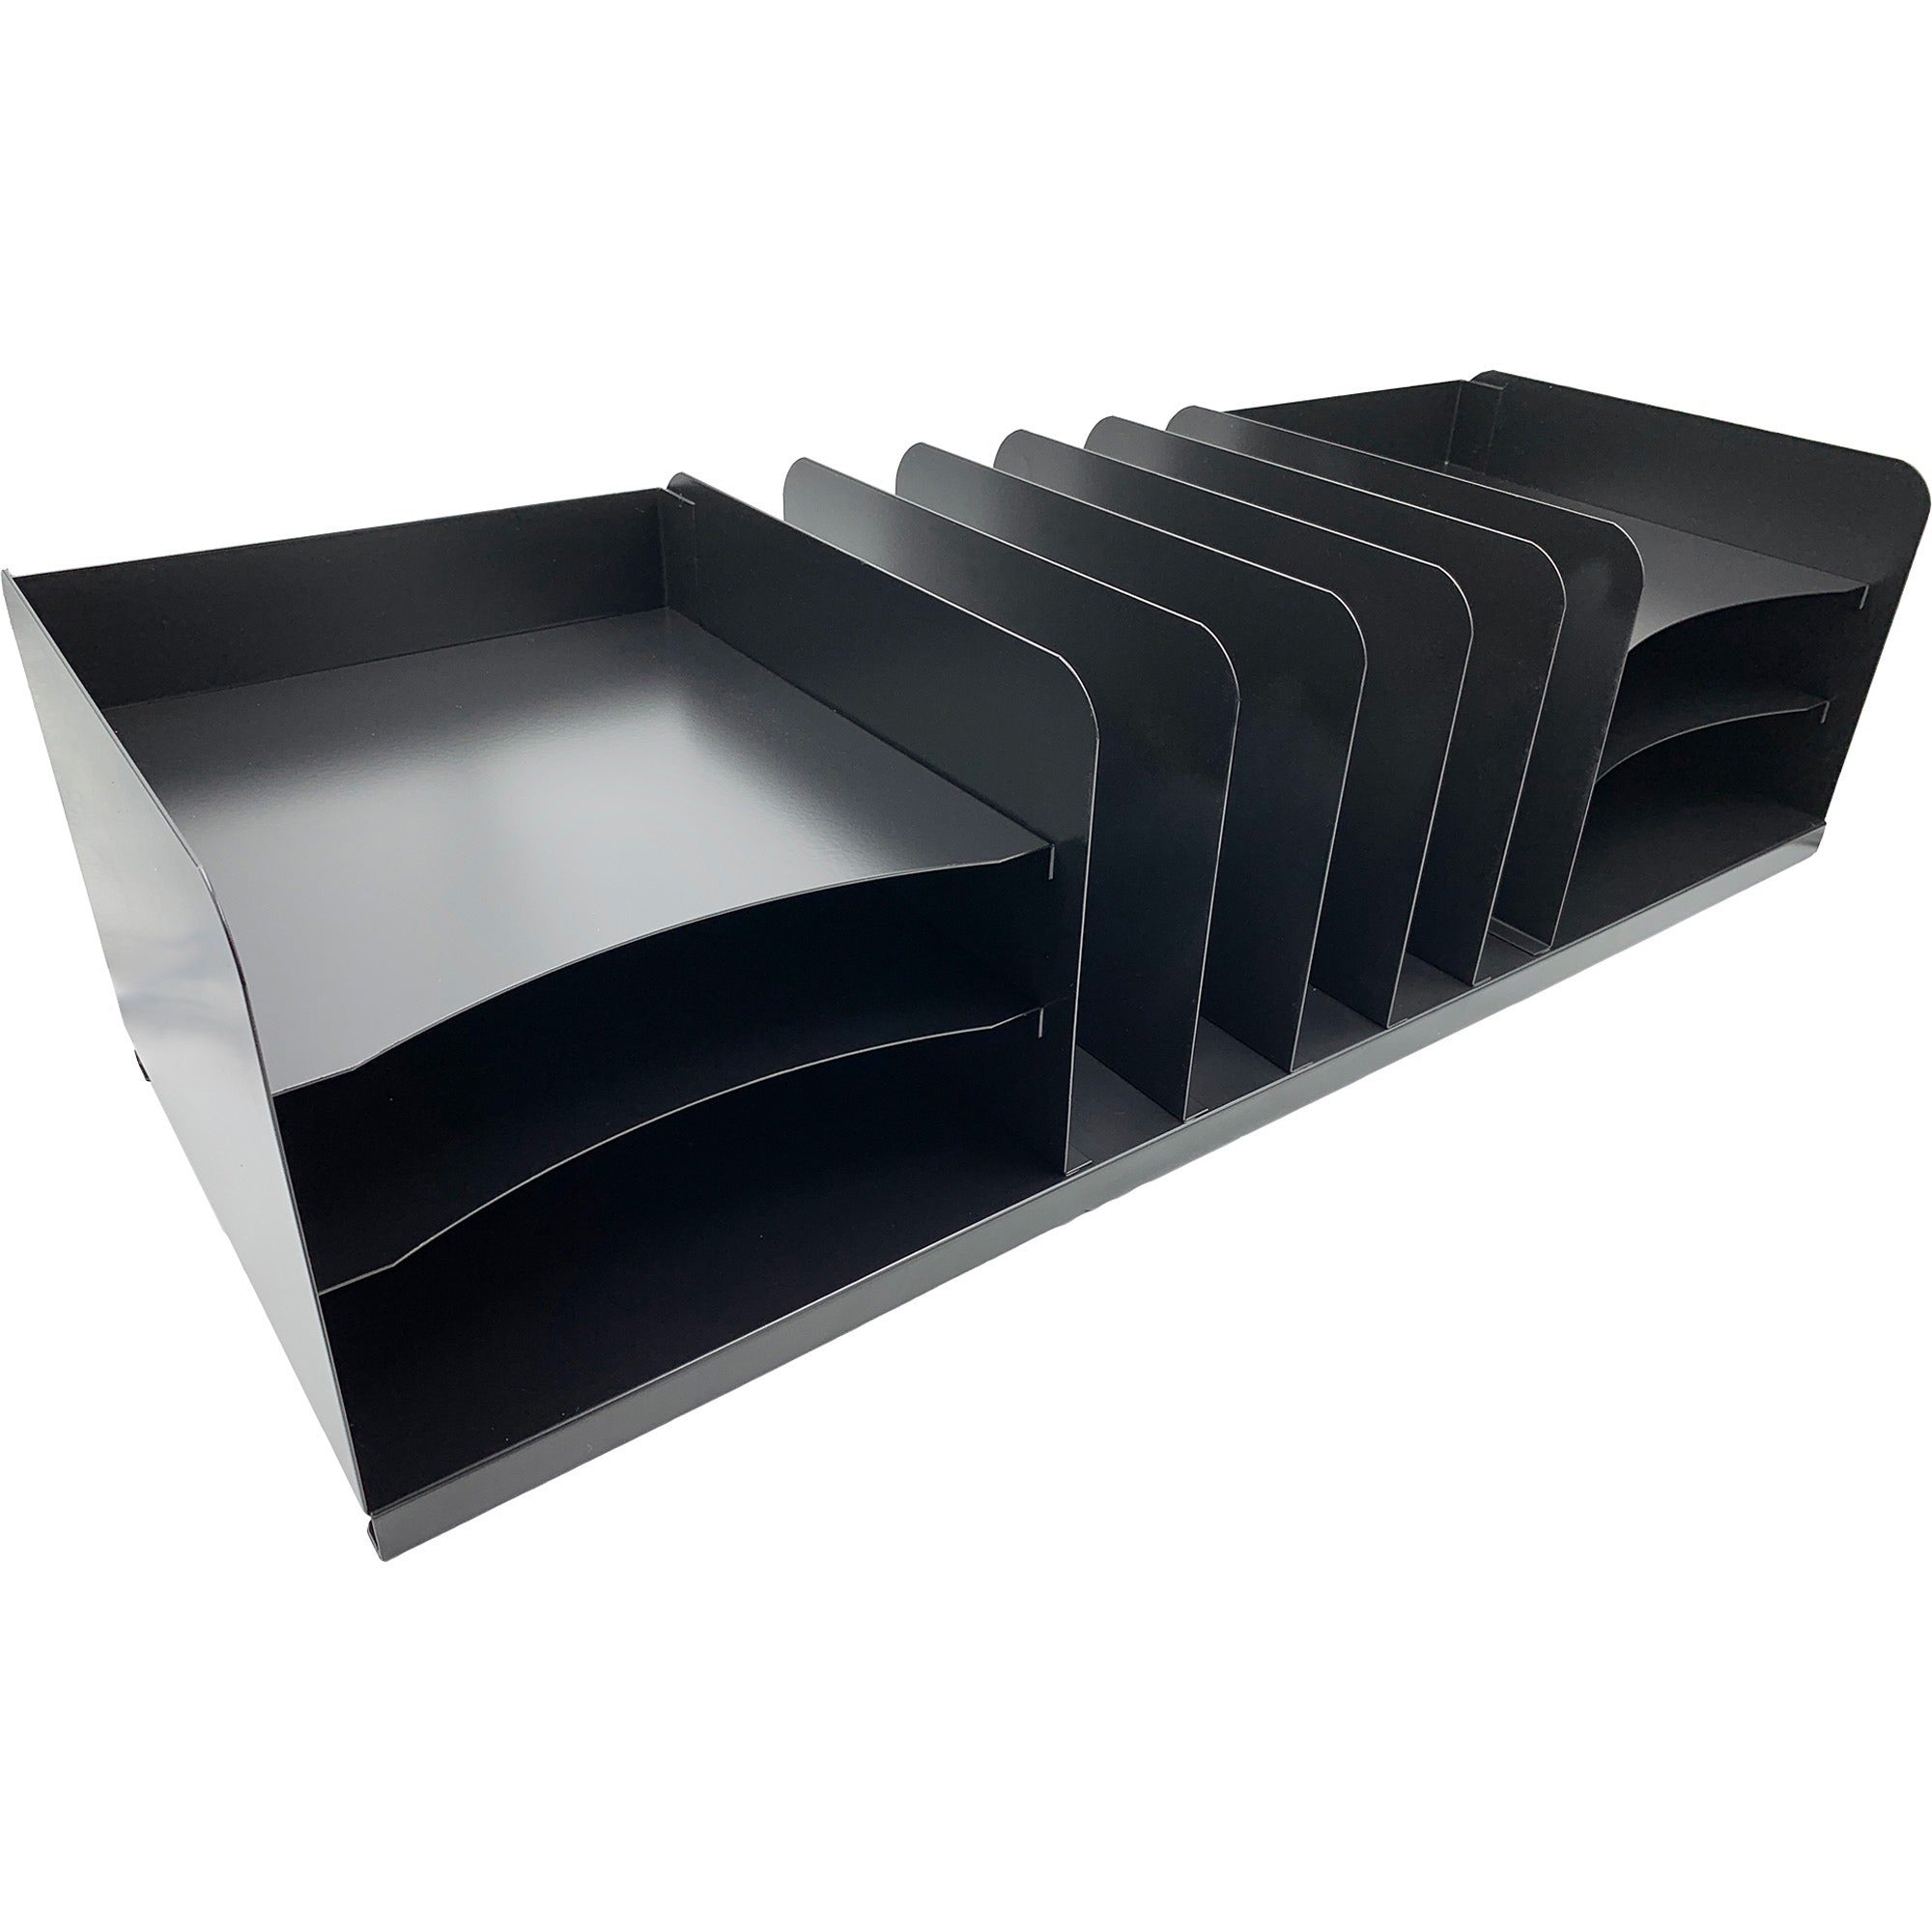 huron-vertical-horizontal-combo-desk-organizer-11-compartments-horizontal-vertical-8-height-x-30-width-x-11-depth-durable-black-steel-1-each_hurhasz0170 - 2